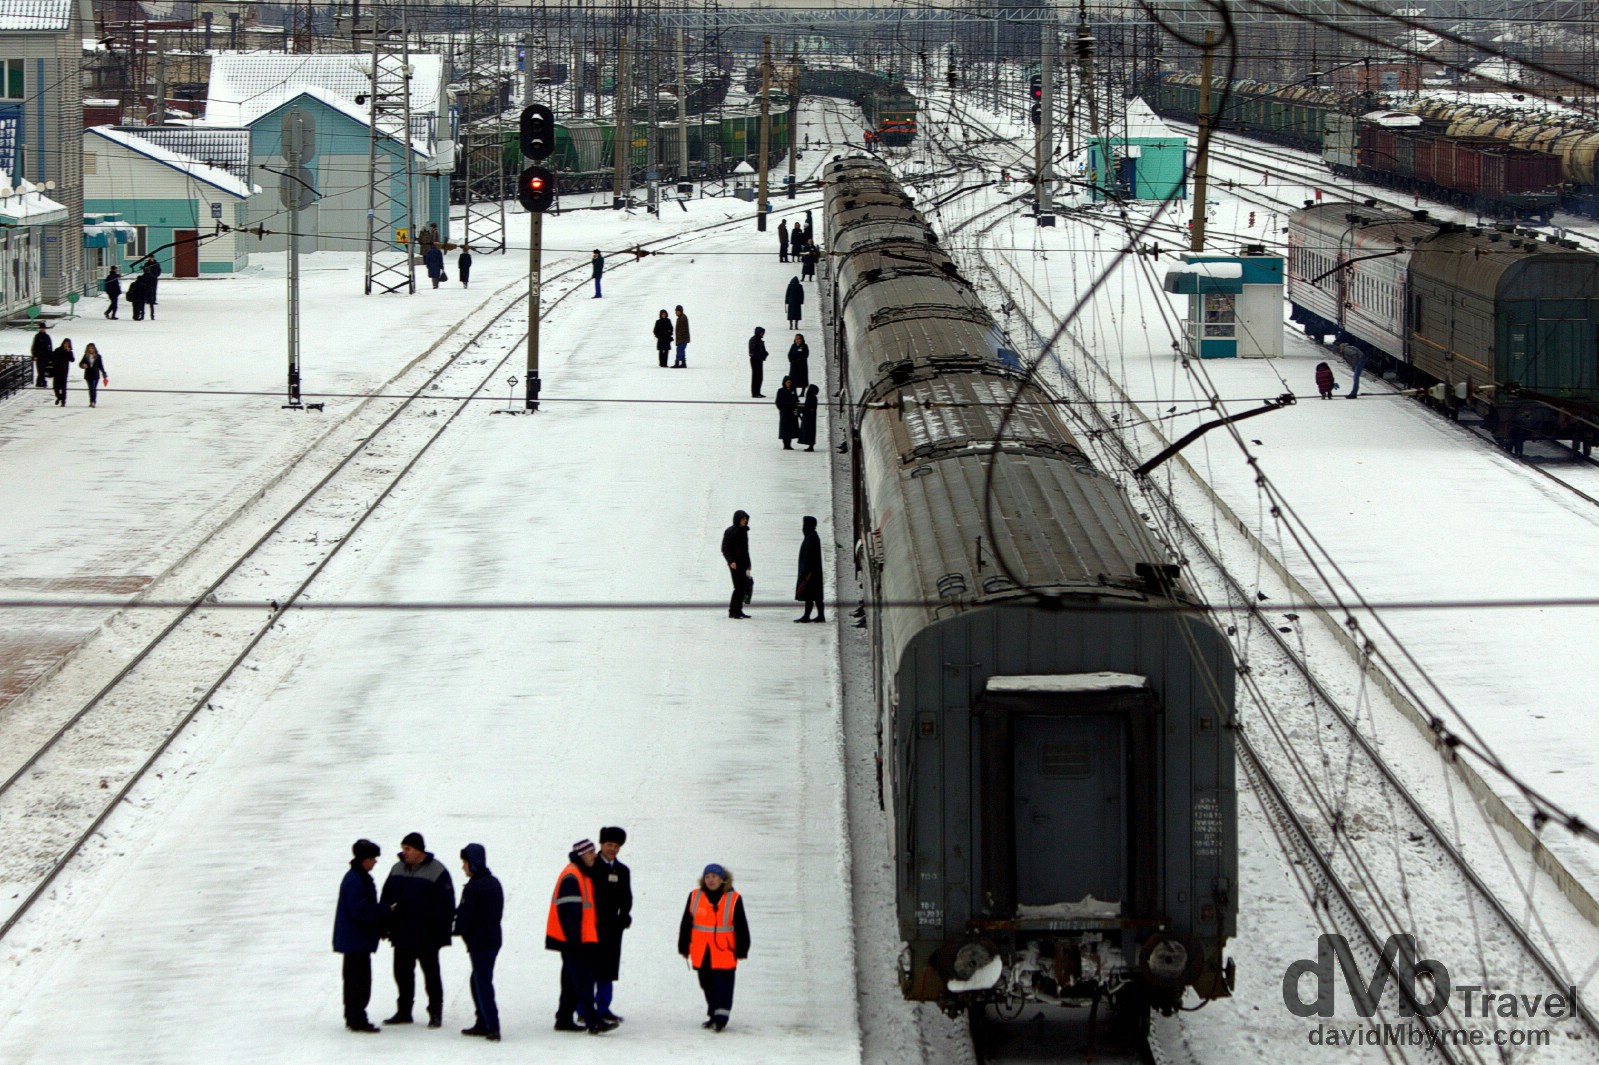 Train 037, minus its locomotive, sitting in Tayga train station as seen from a bridge spanning the station tracks. Tayga, Siberian Russia. November 12th 2012.